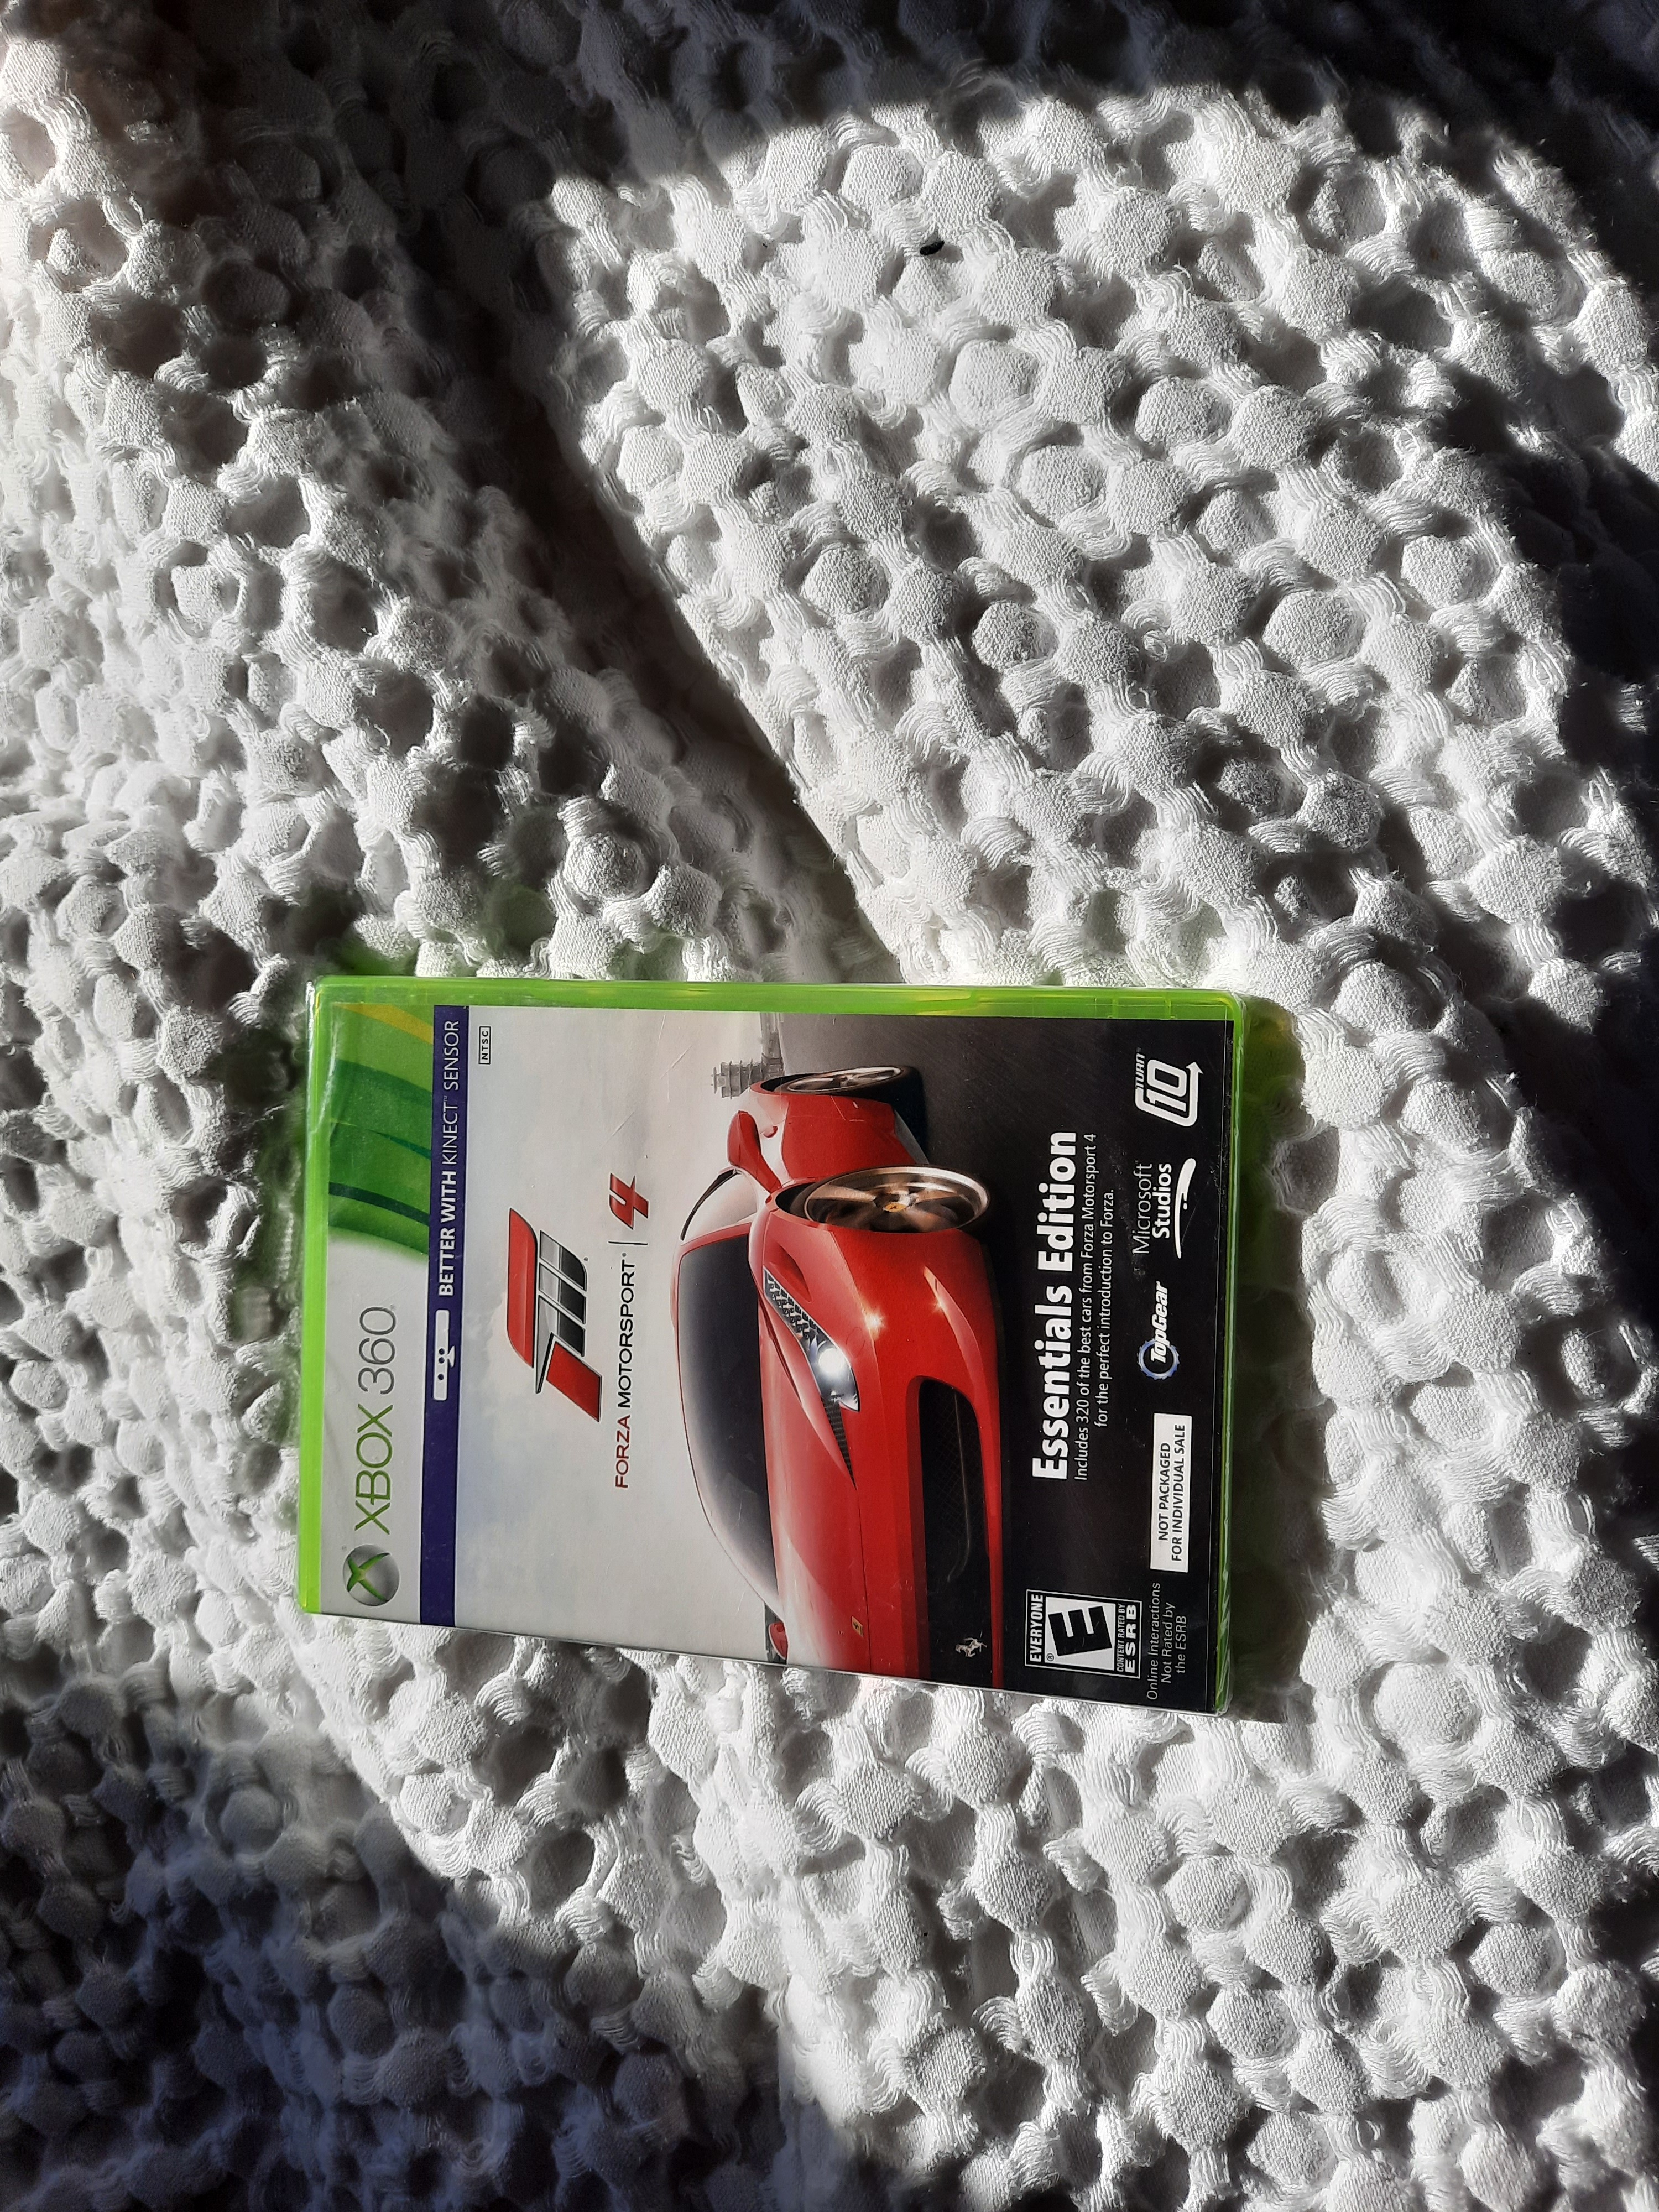 Forza Motorsport 4: Essentials Edition - Xbox 360 